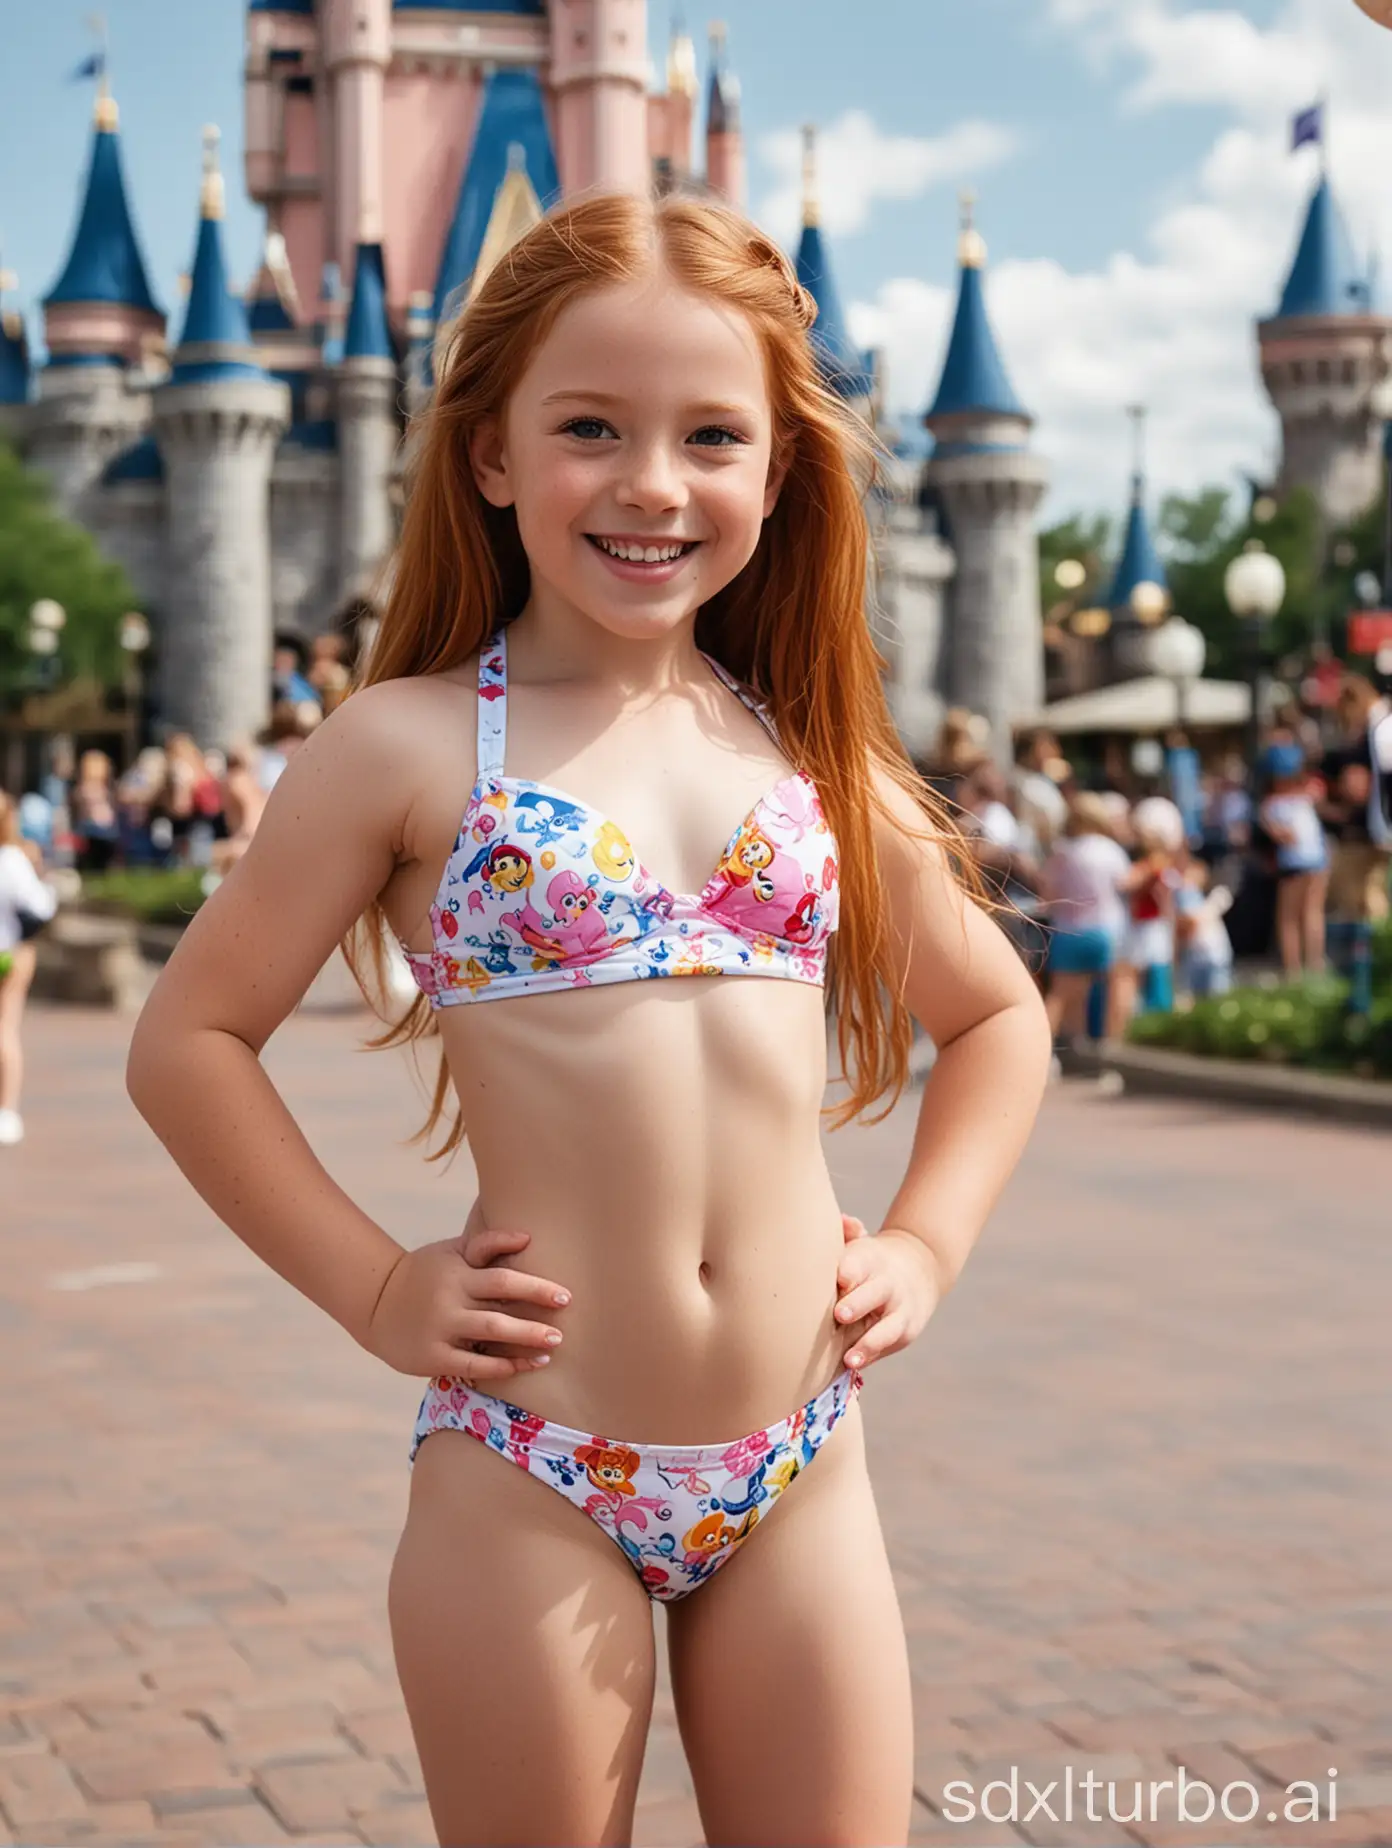 Confident-9YearOld-Girl-in-Disney-Bikini-and-High-Heels-at-Disney-World